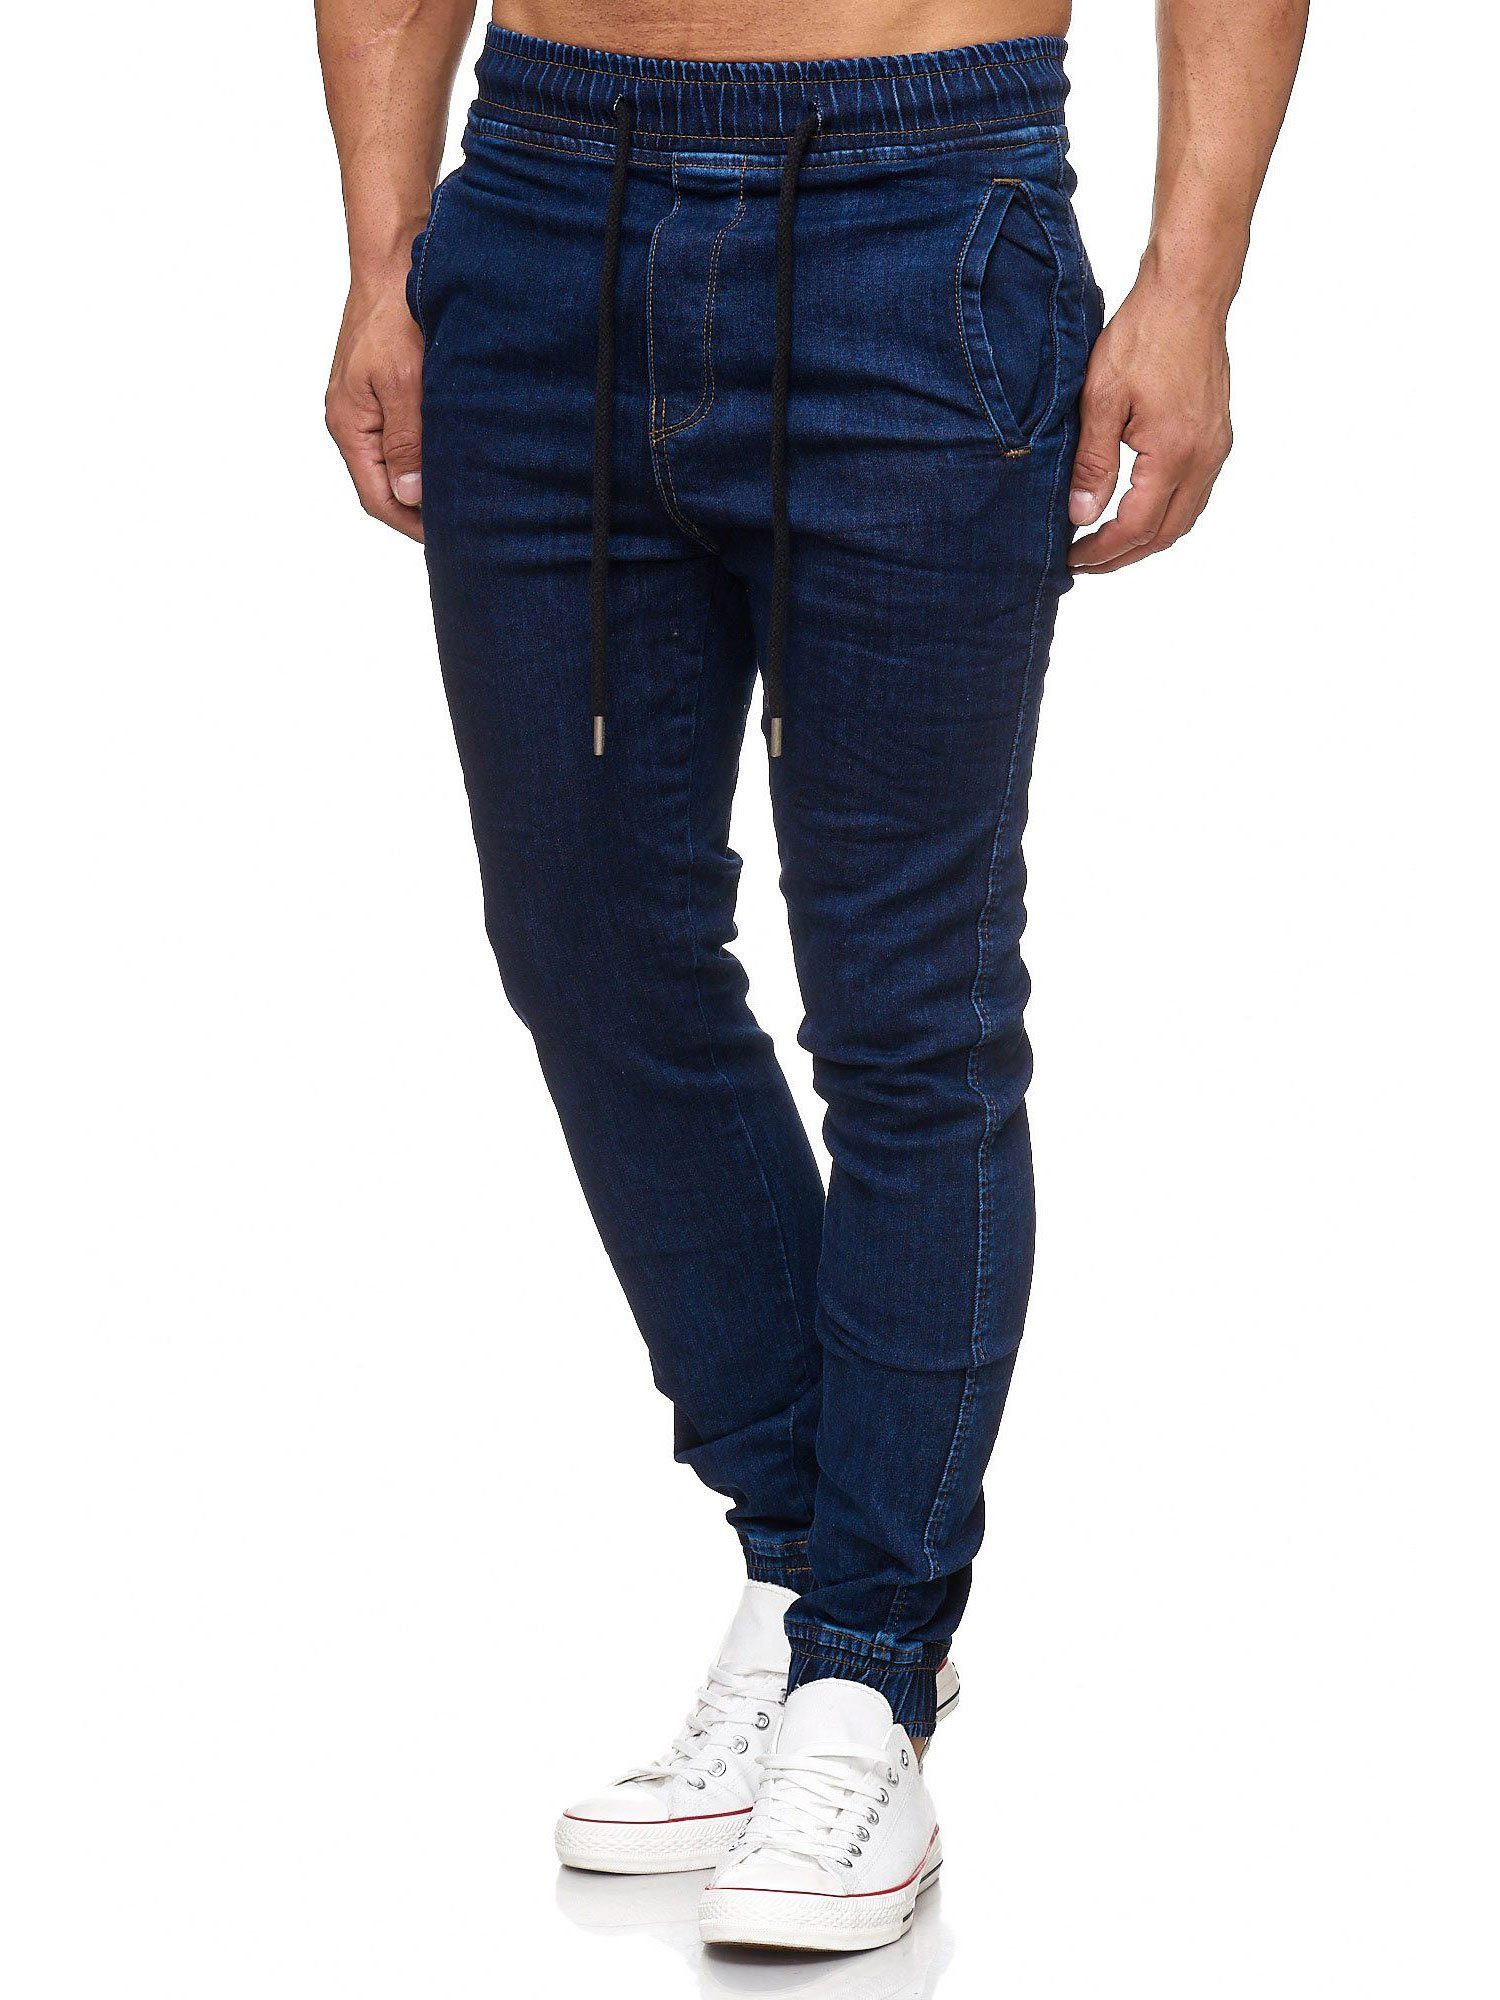 Tazzio Straight-Jeans 17504 Sweat Hose im Jogger-Stil dunkelblau